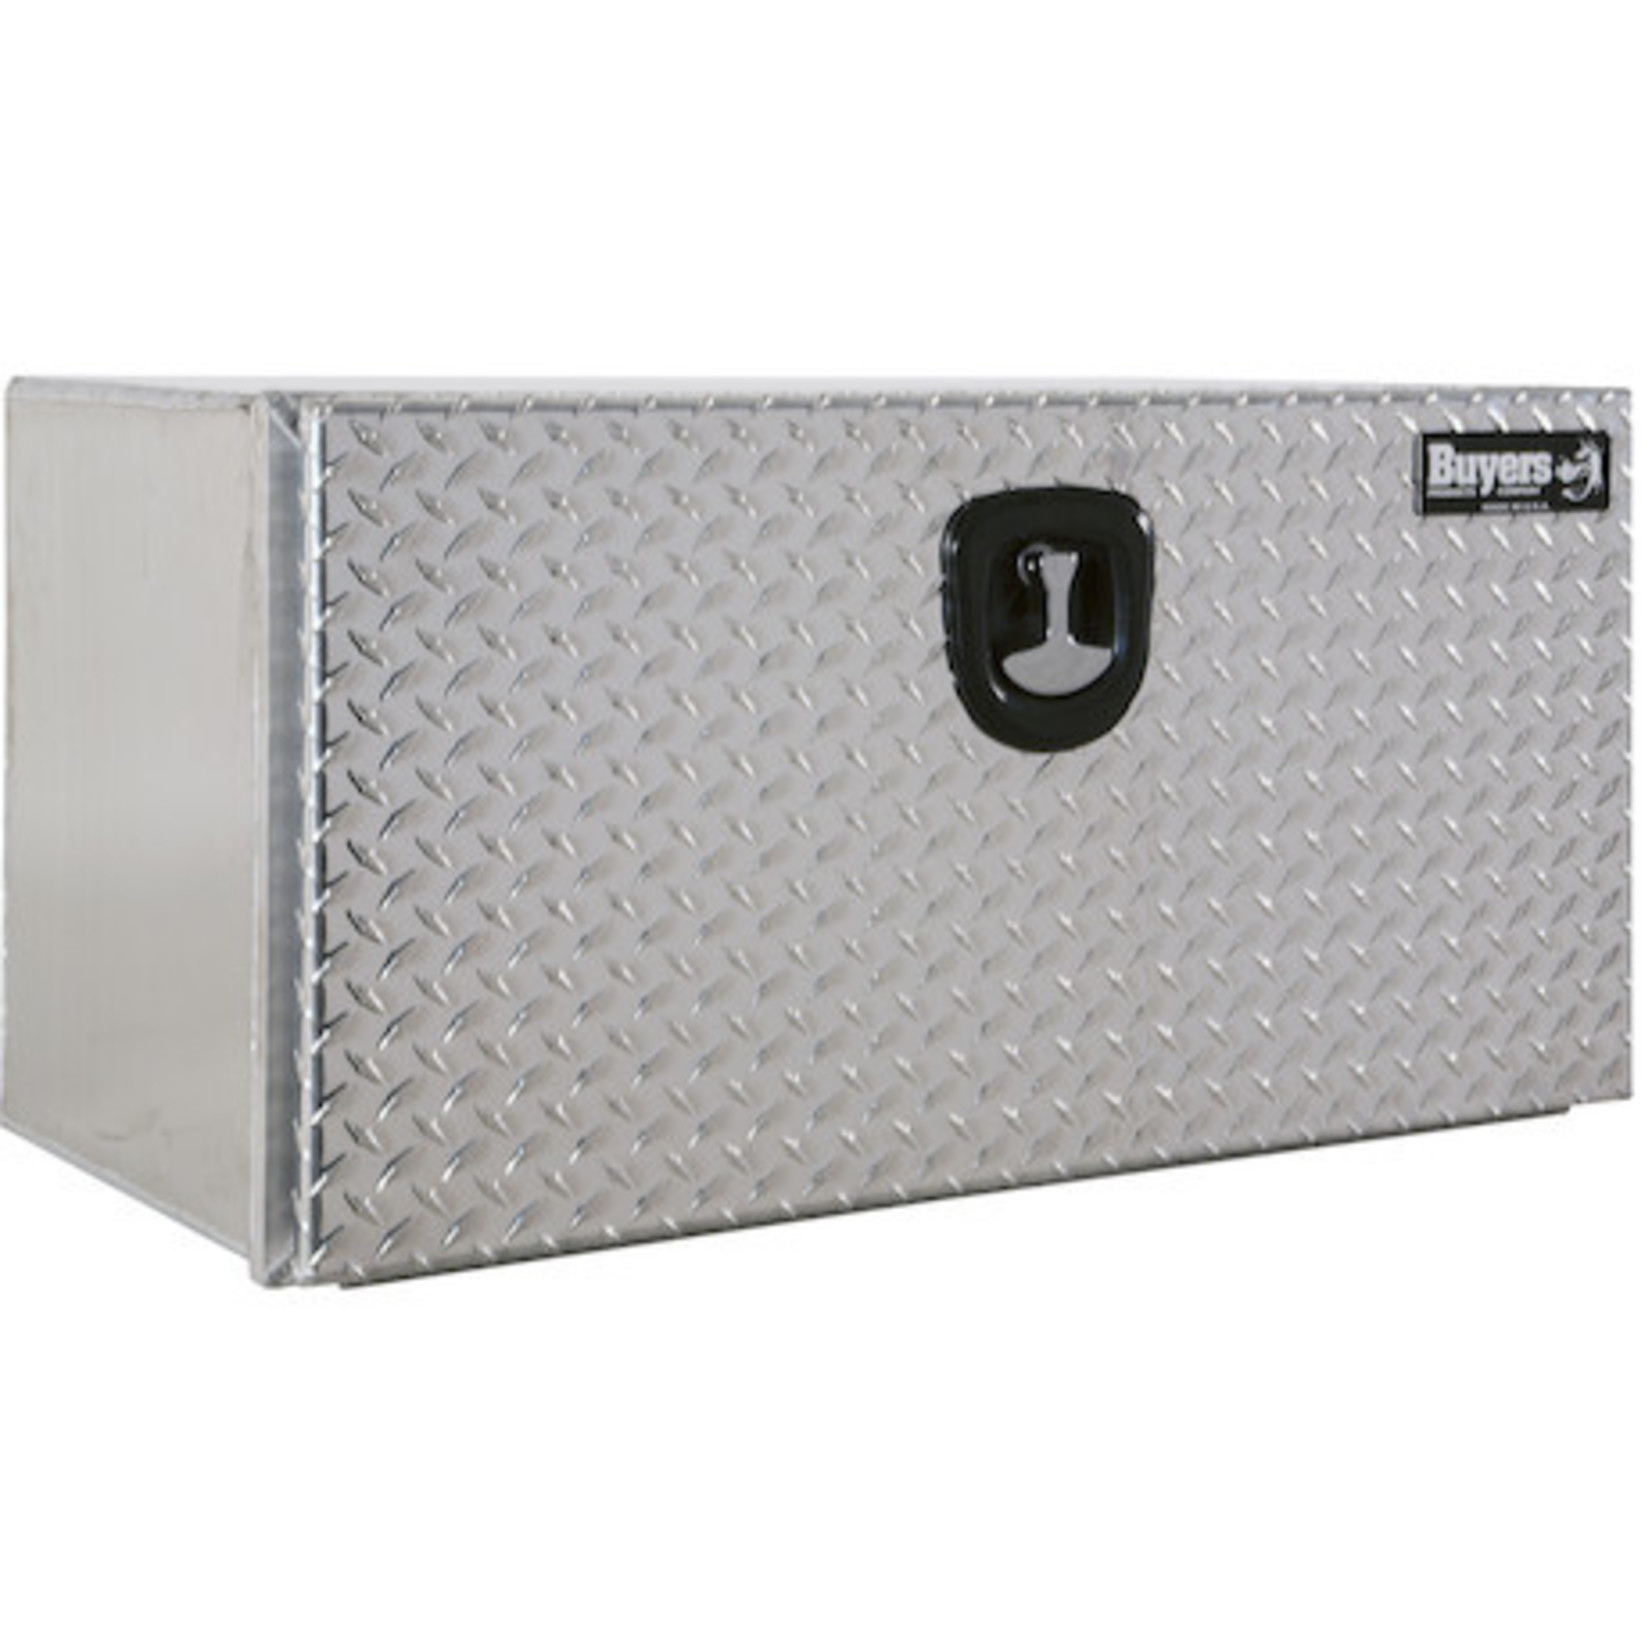 Buyers Products Company XD Smooth Aluminum Underbody Truck Box with Diamond Tread Door Series